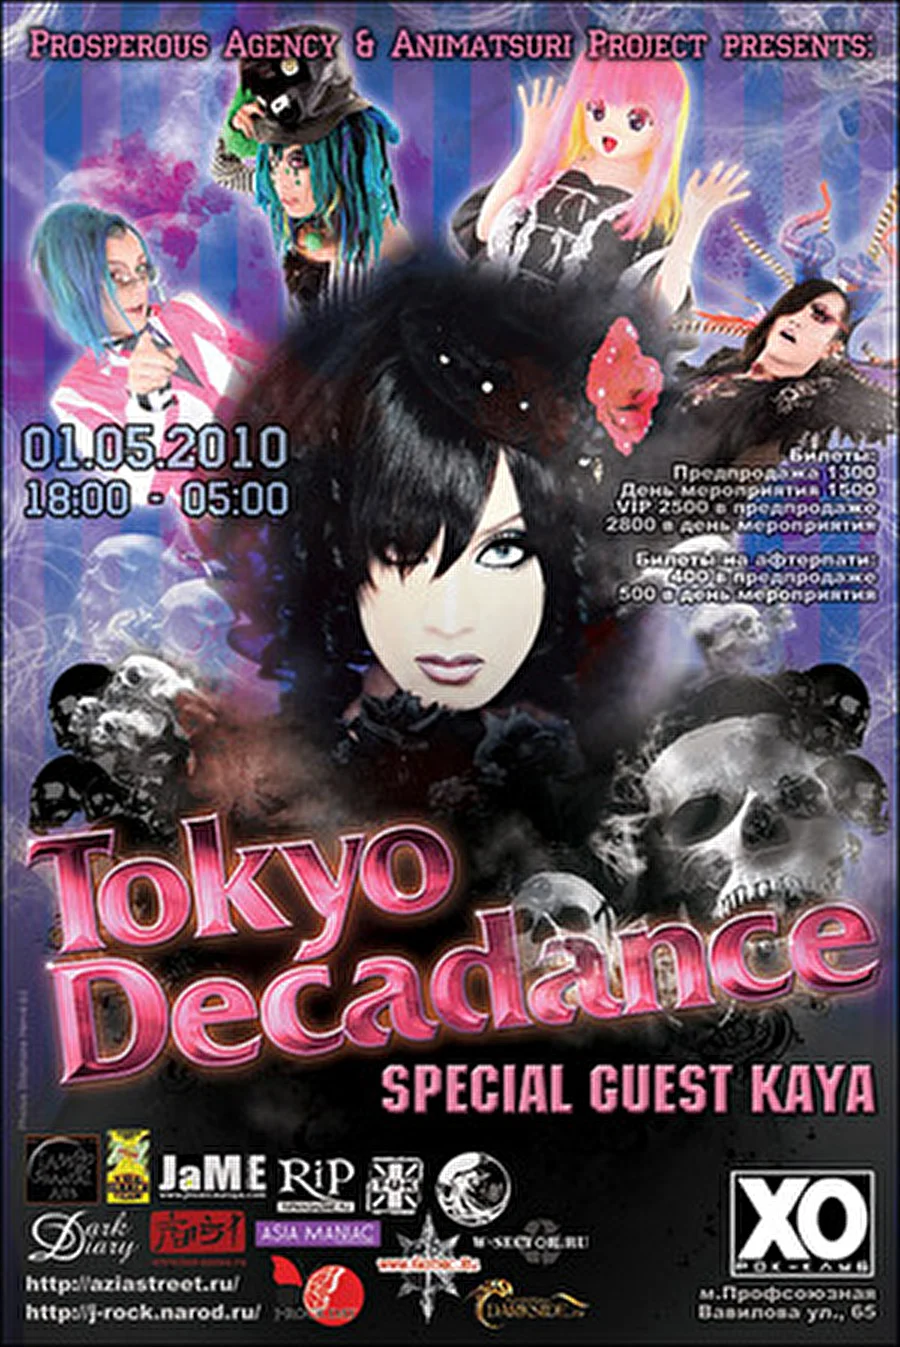 Tokyo Decadance Moscow - Special Guest Kaya - уникальное шоу в XO